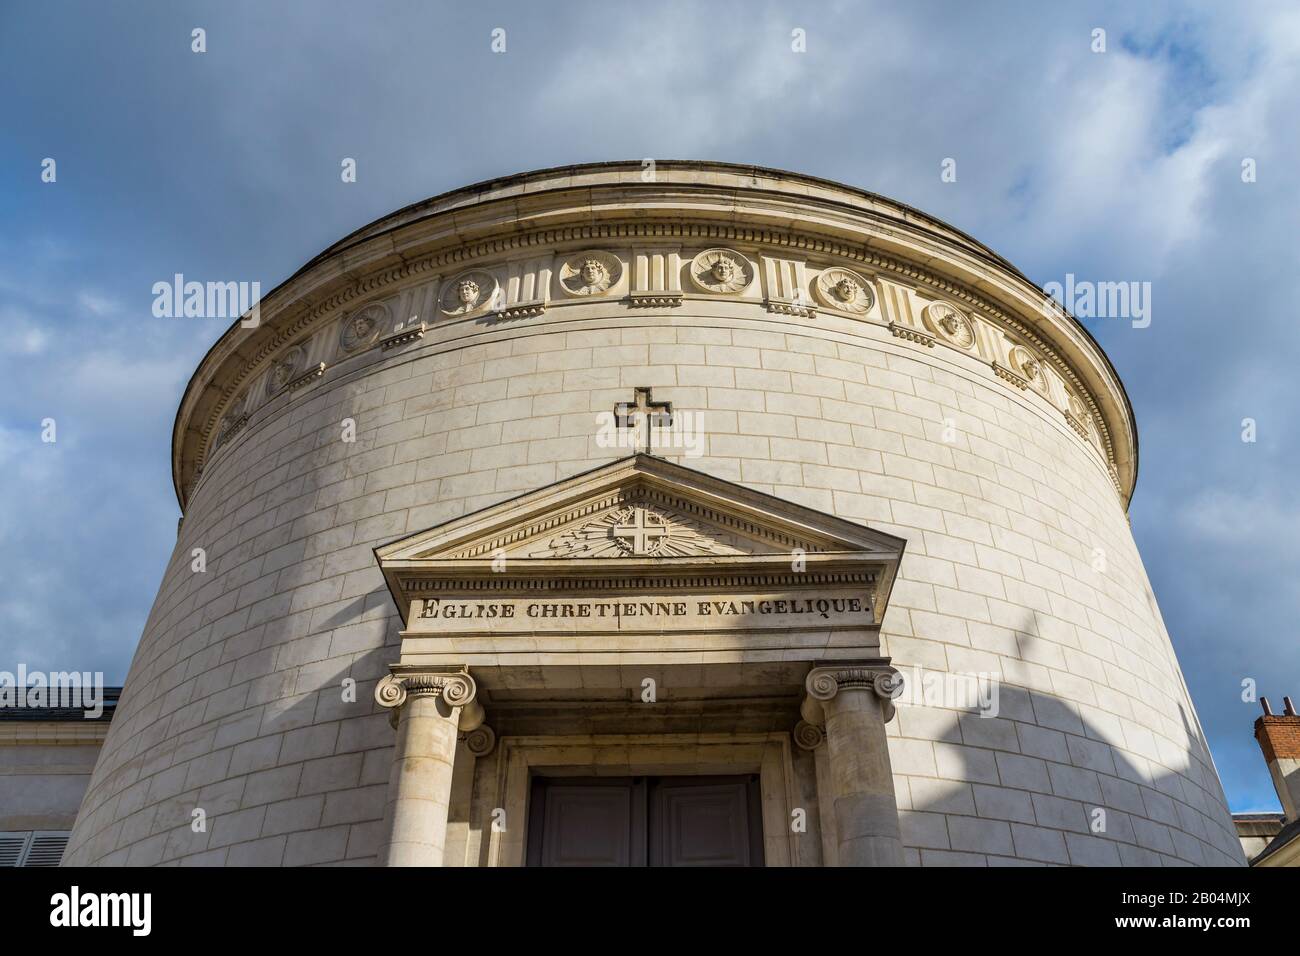 Entrance to the Christian Evangelist church, Rue de Bourgogne, Orleans, Loiret, France. Stock Photo